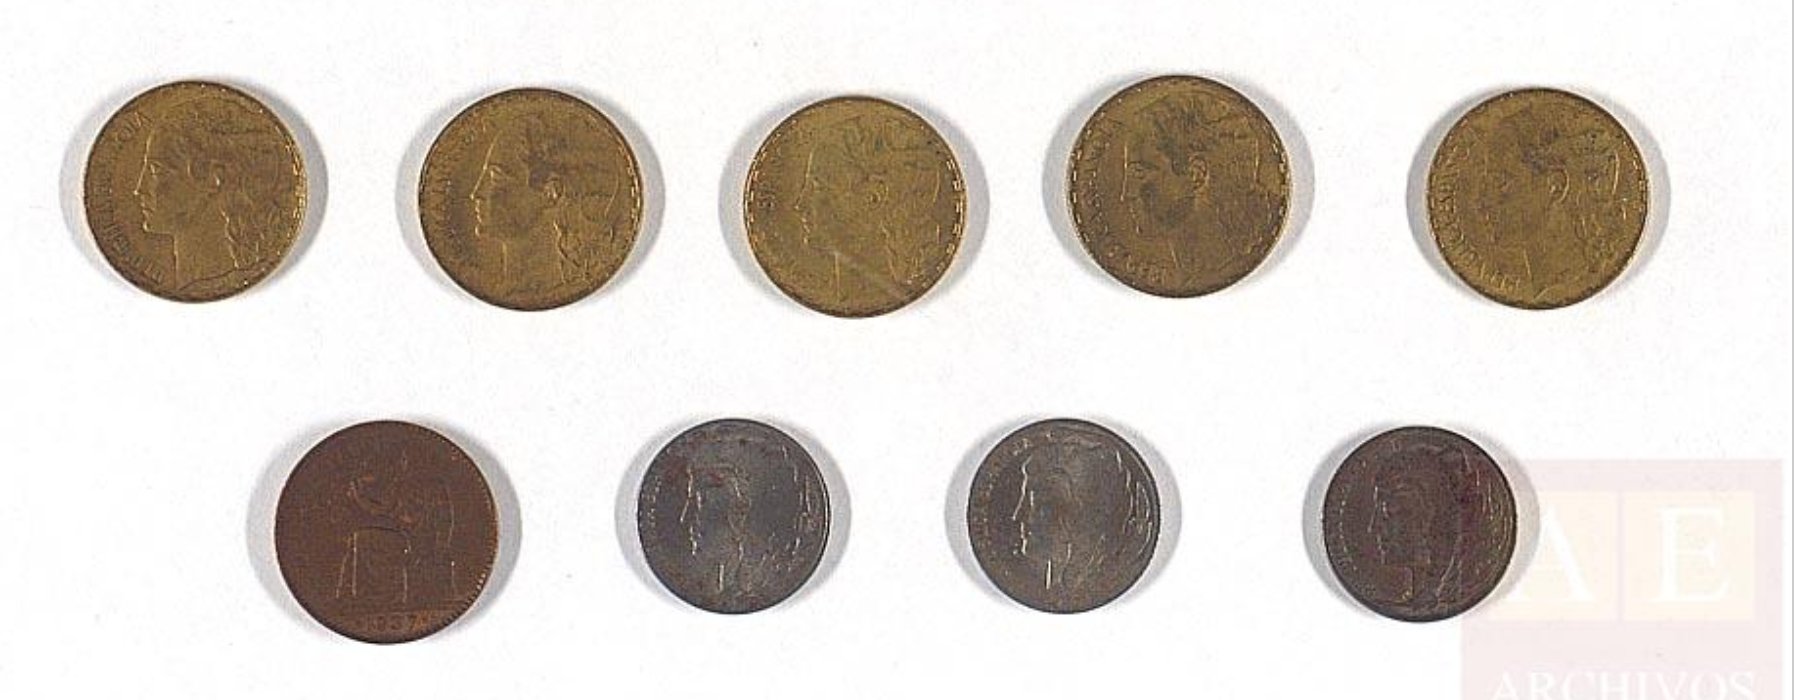 Archivo Histórico Nacional, Monedas republicanas (Republican Coins), available here
